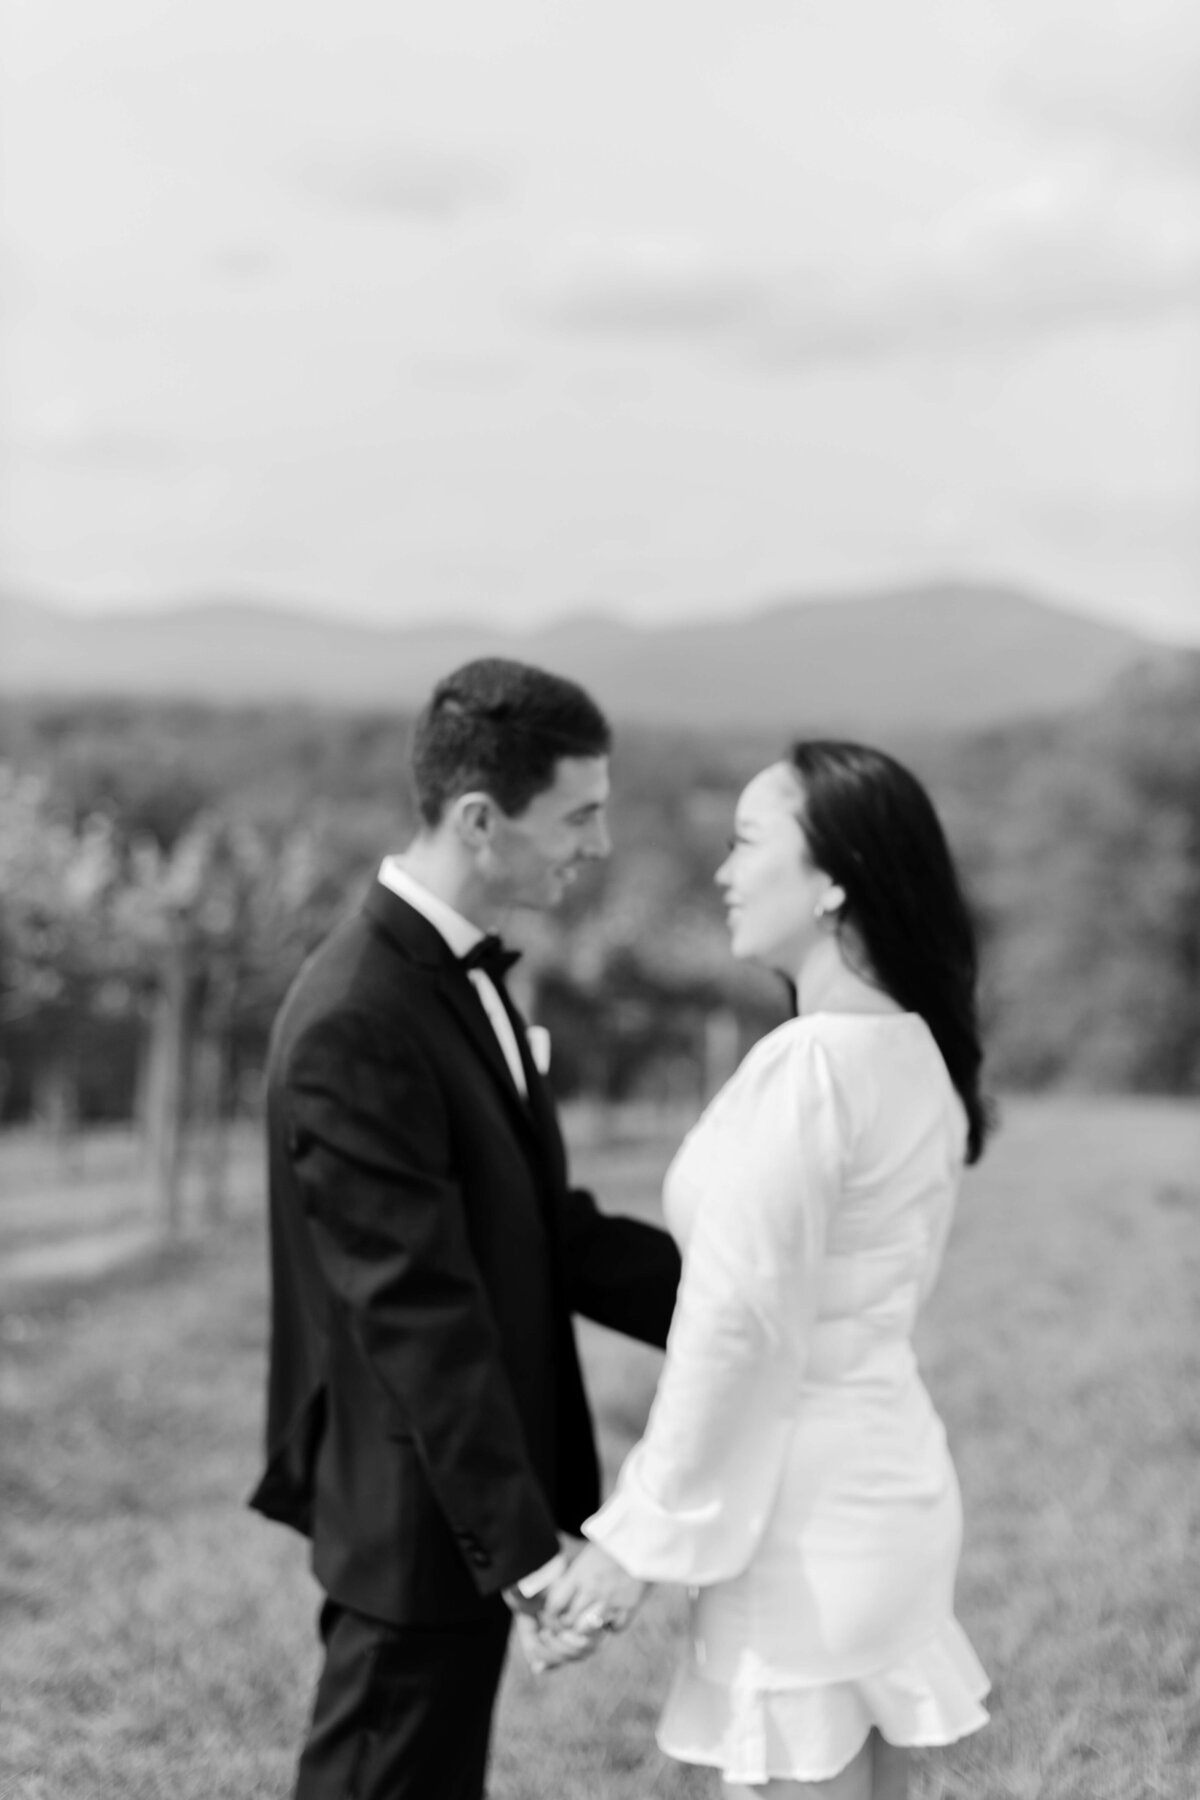 A bride and groom share a moment at Kaya Vineyards.